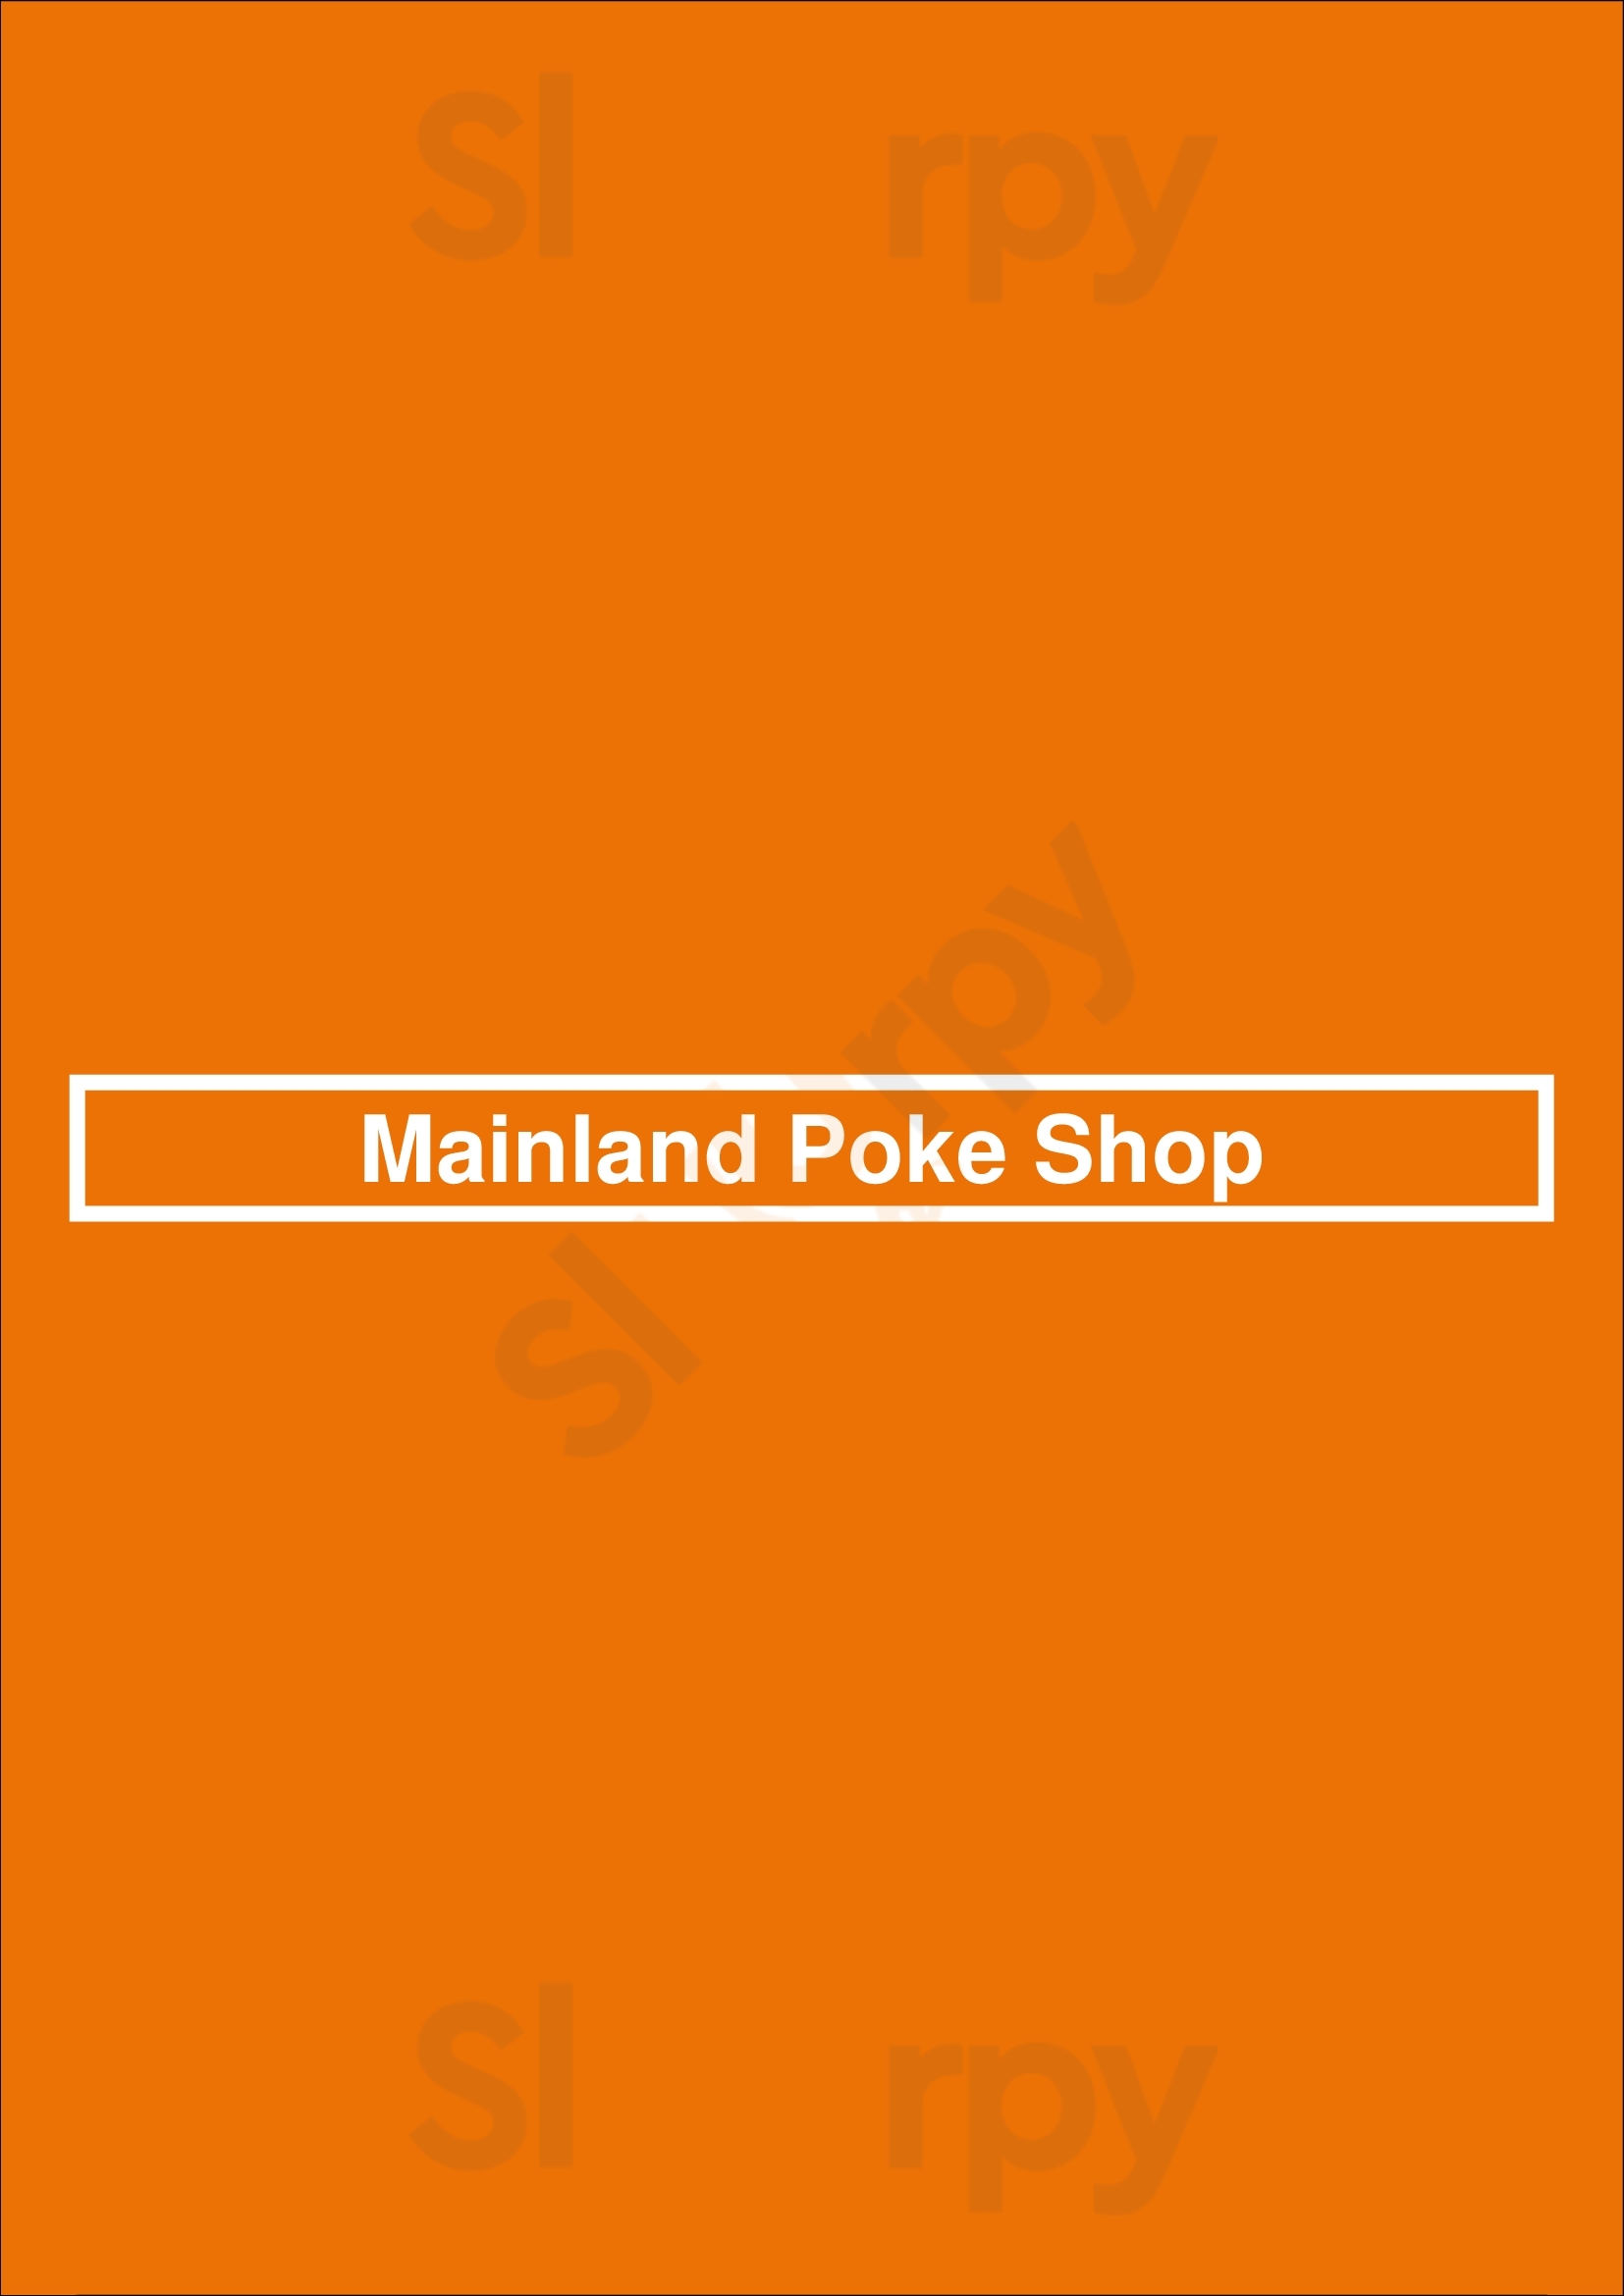 Mainland Poke Shop Los Angeles Menu - 1